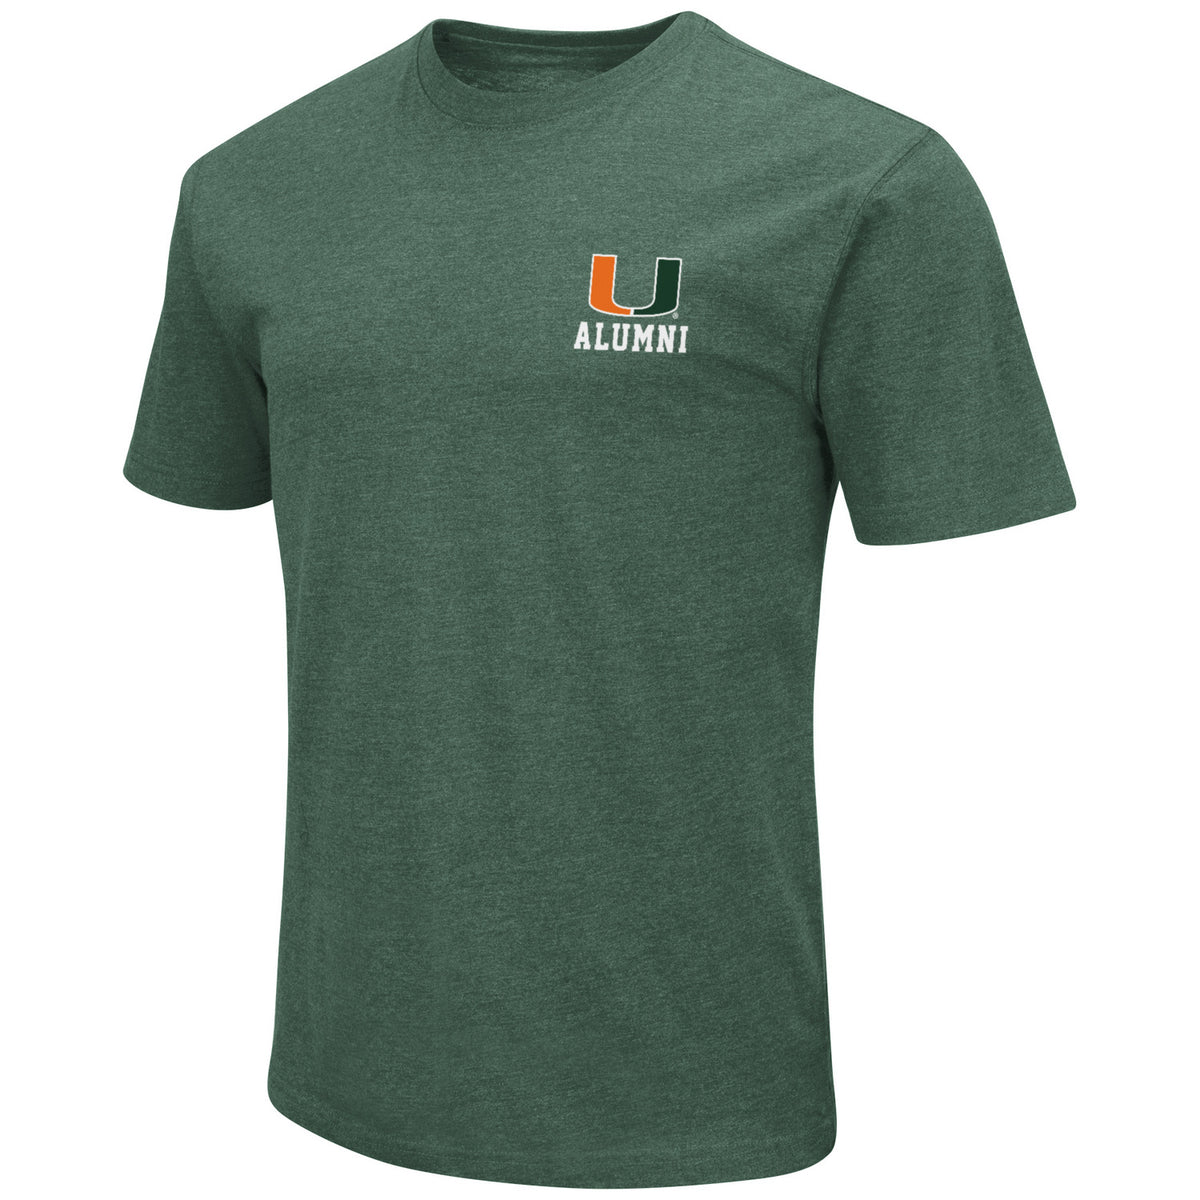 Colosseum University of Miami Alumni Green T-Shirt